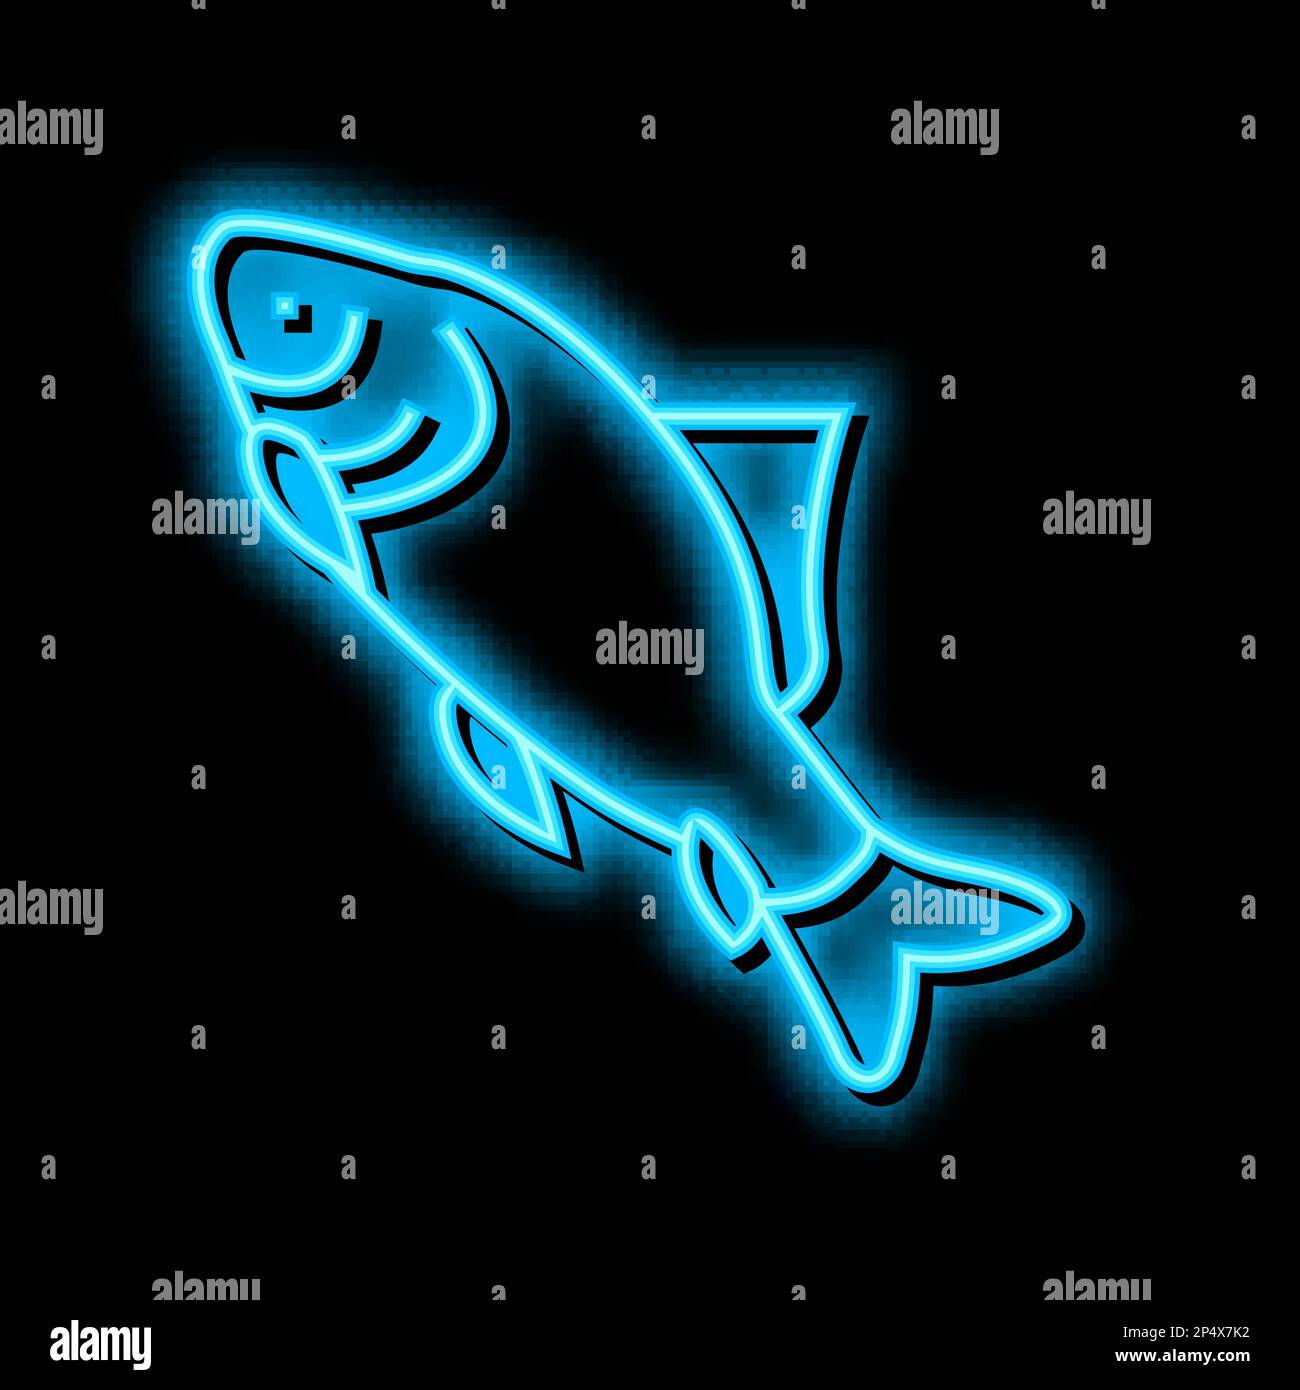 Abbildung des neonfarbenen Leuchtsymbols für Catla Catla Fish Stock Vektor